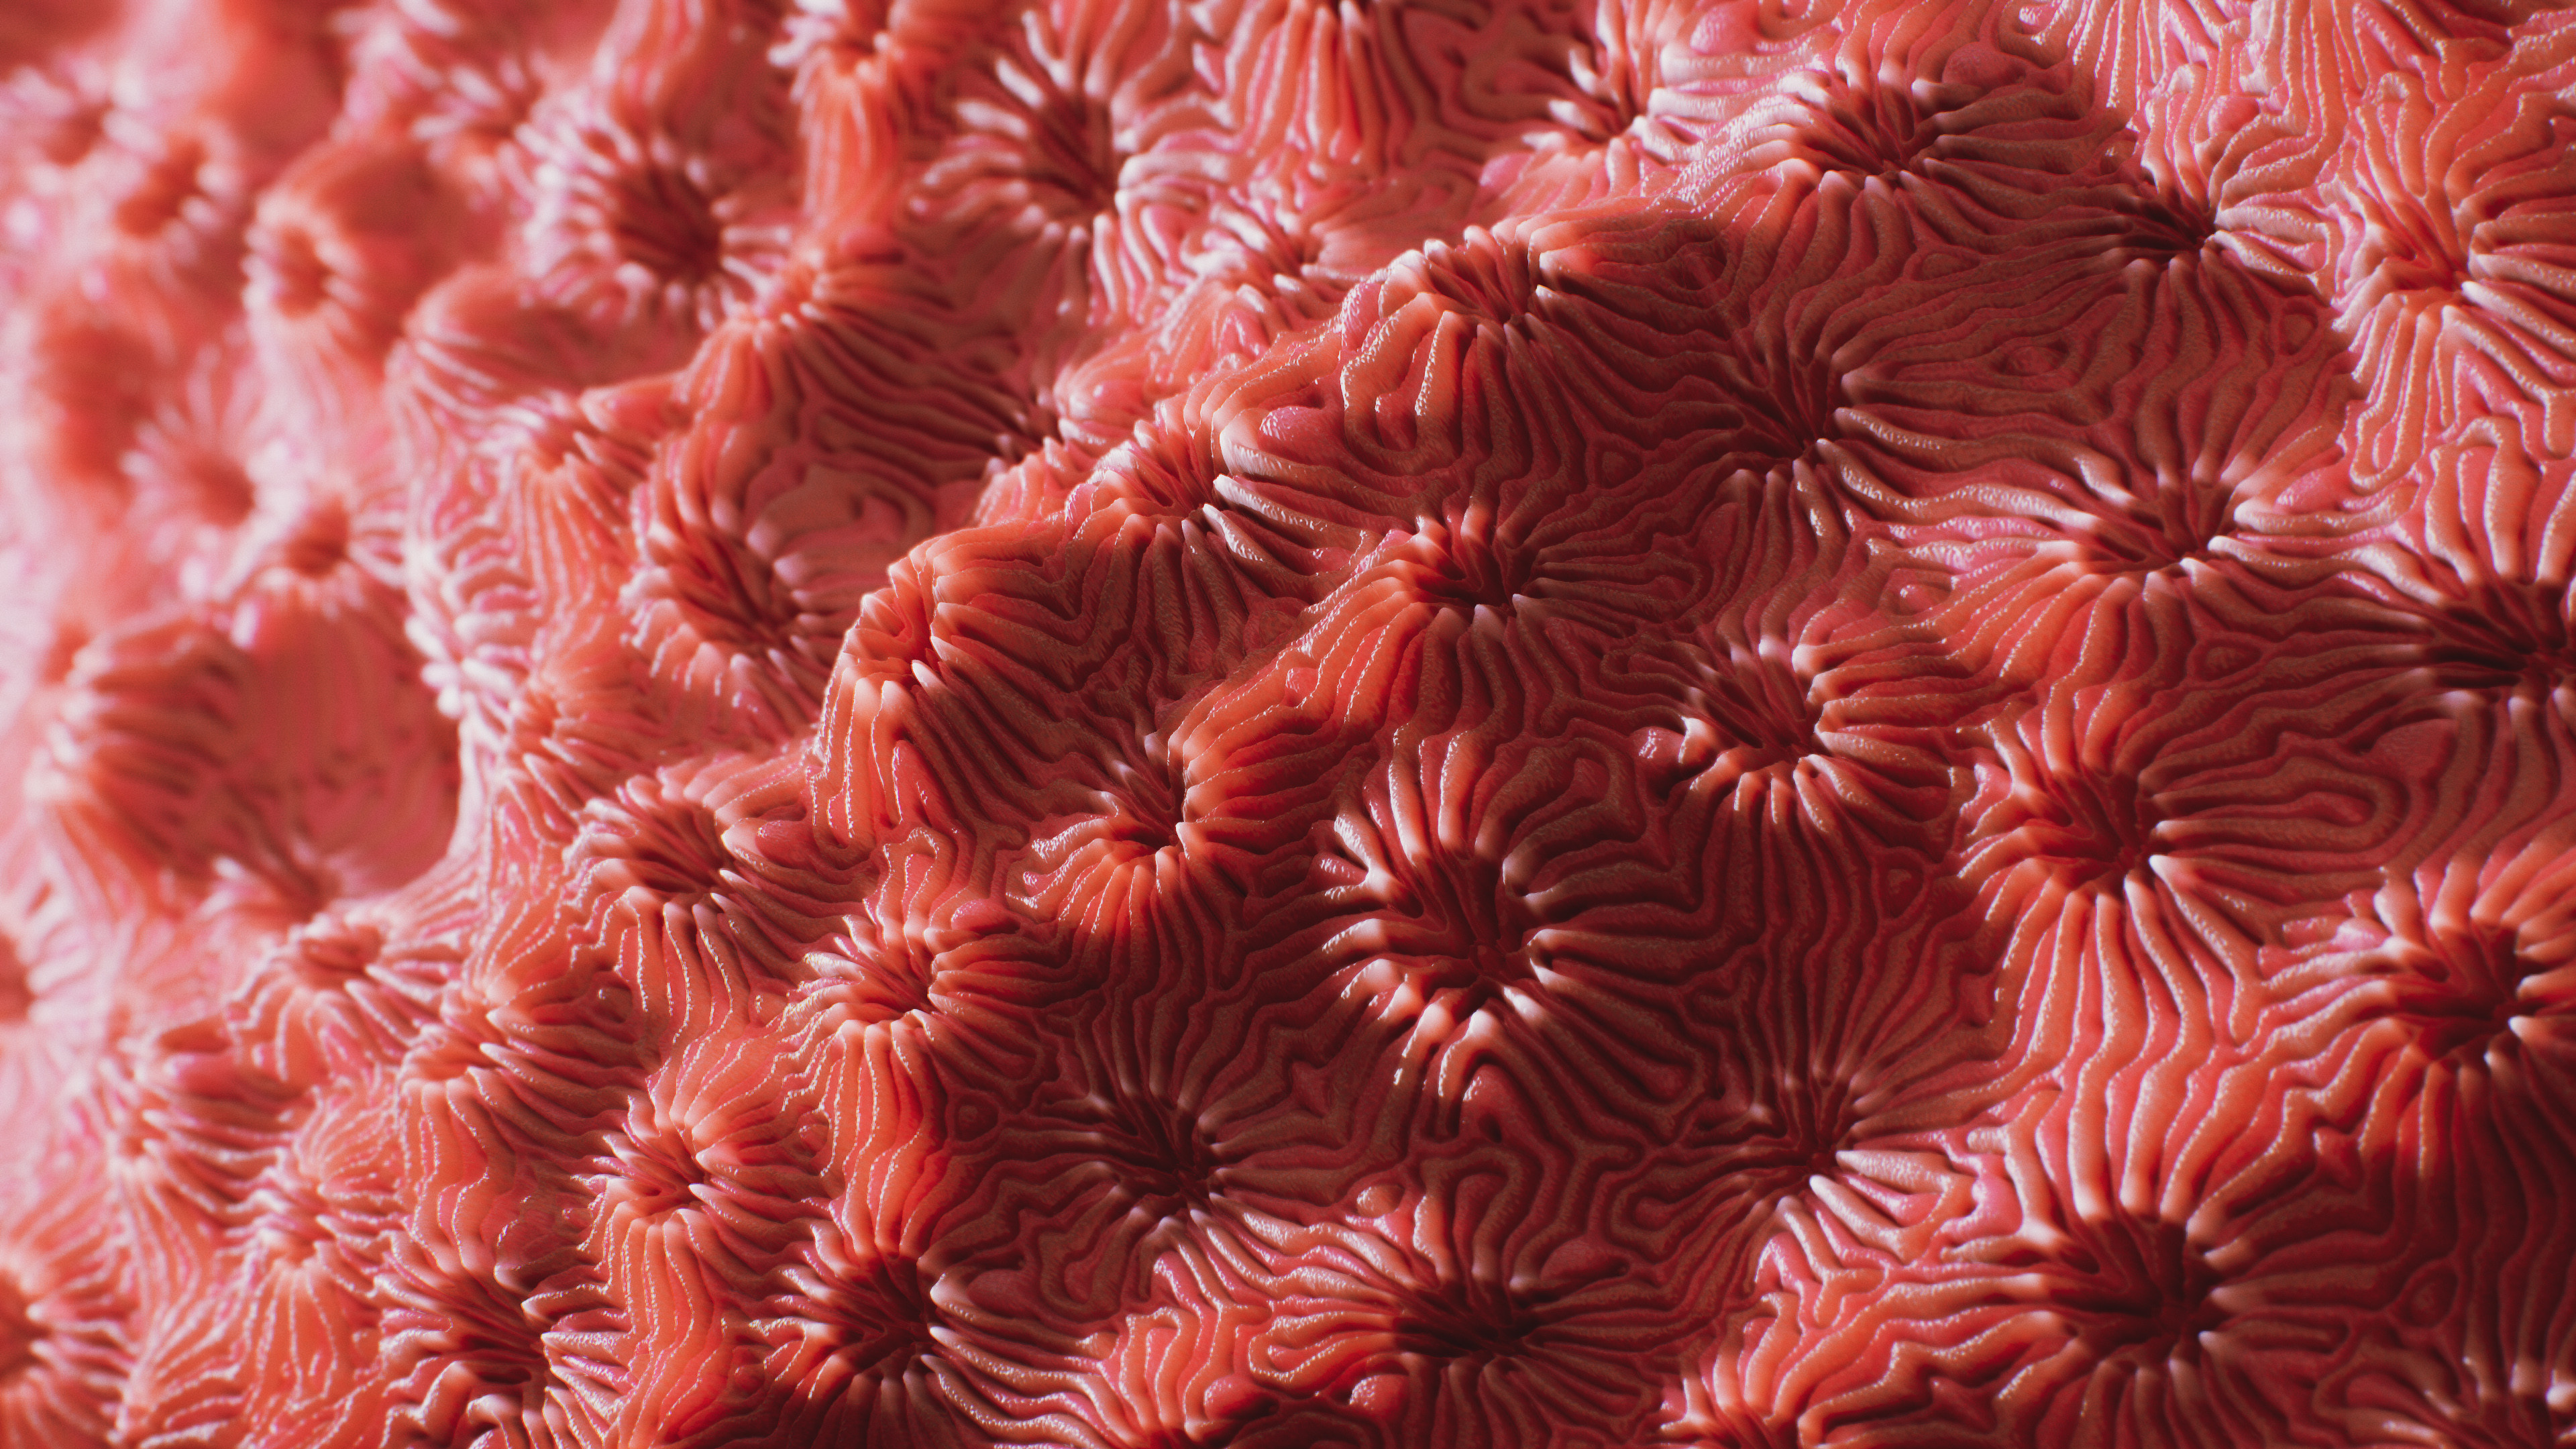 Coral pavona artwork, Substance source inspiration, Creative expression, Coral-inspired designs, 3840x2160 4K Desktop